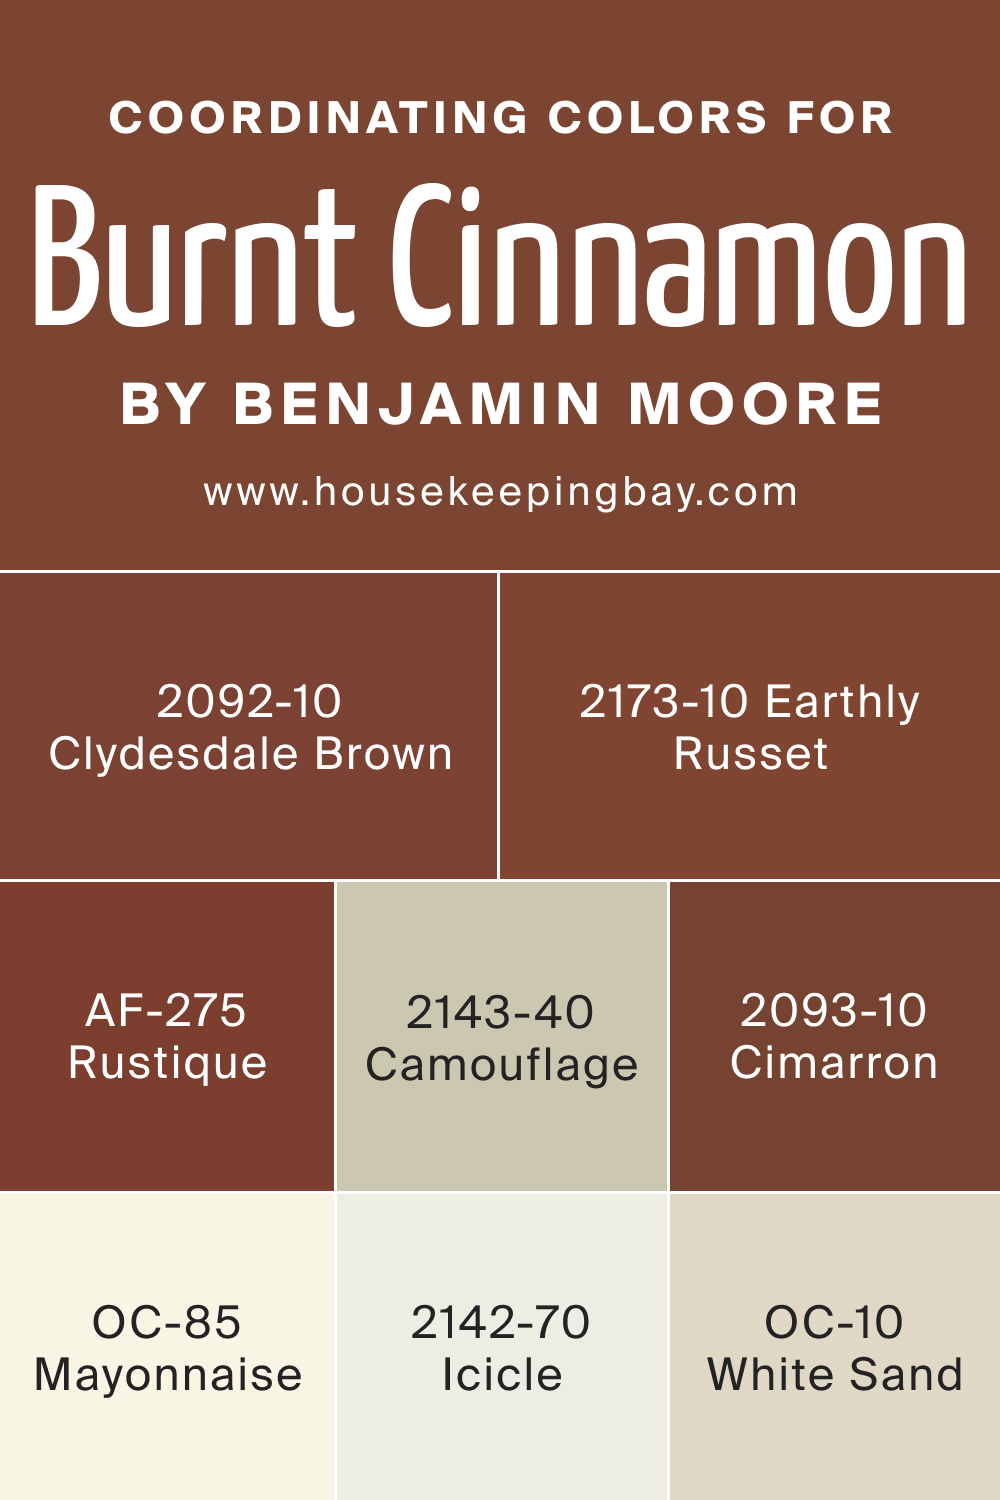 Coordinating Colors of Burnt Cinnamon 2094-10